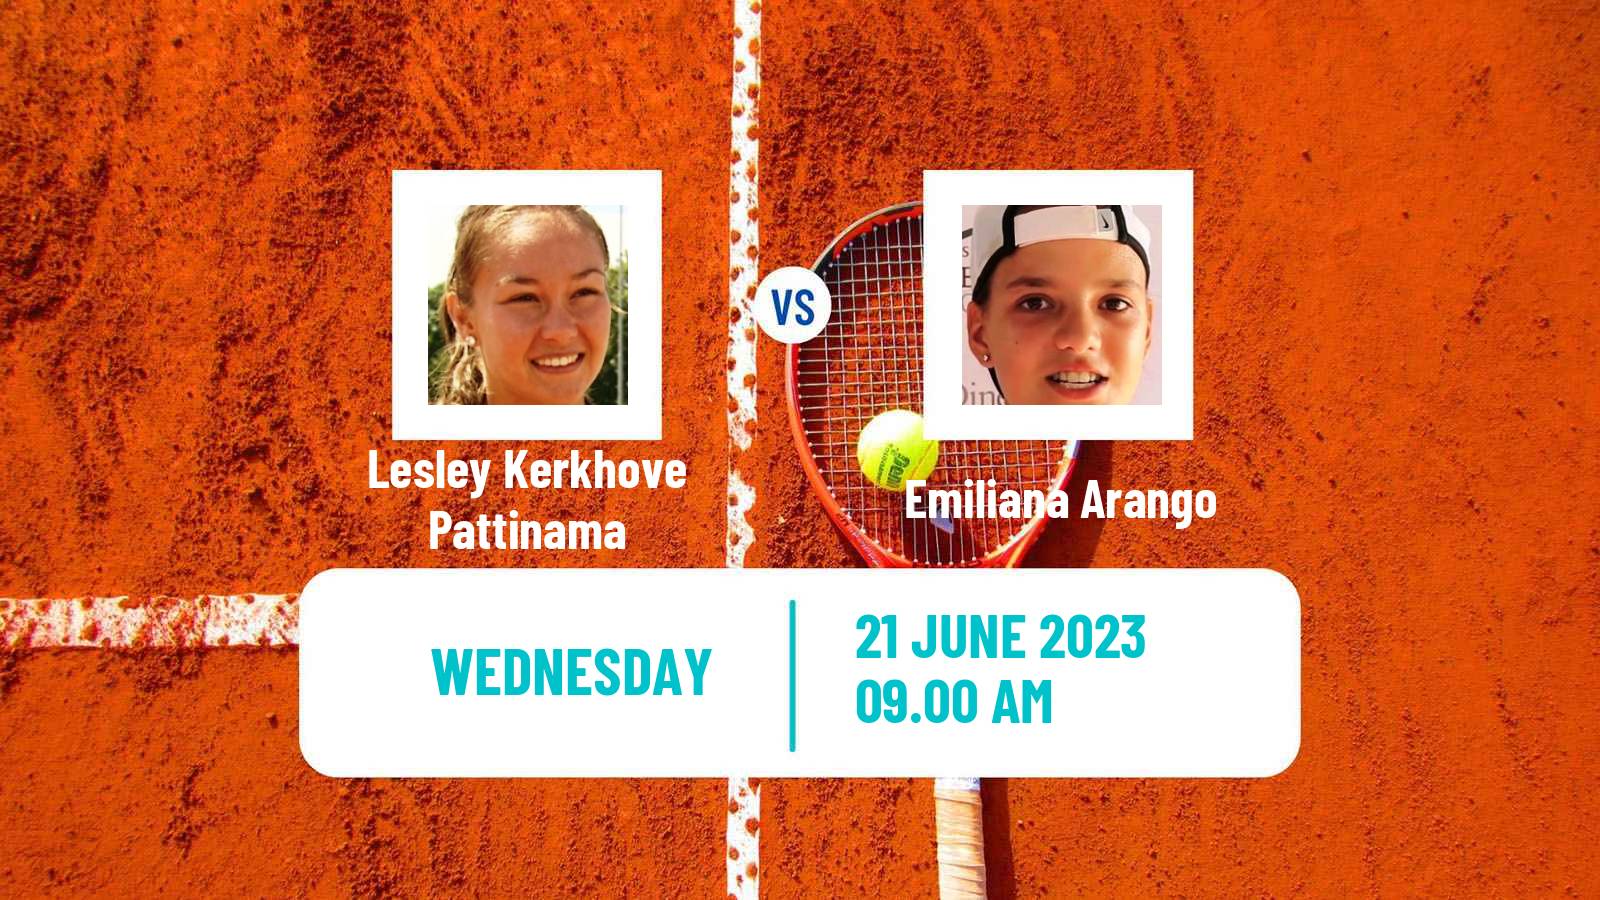 Tennis ITF W100 Ilkley Women Lesley Kerkhove Pattinama - Emiliana Arango